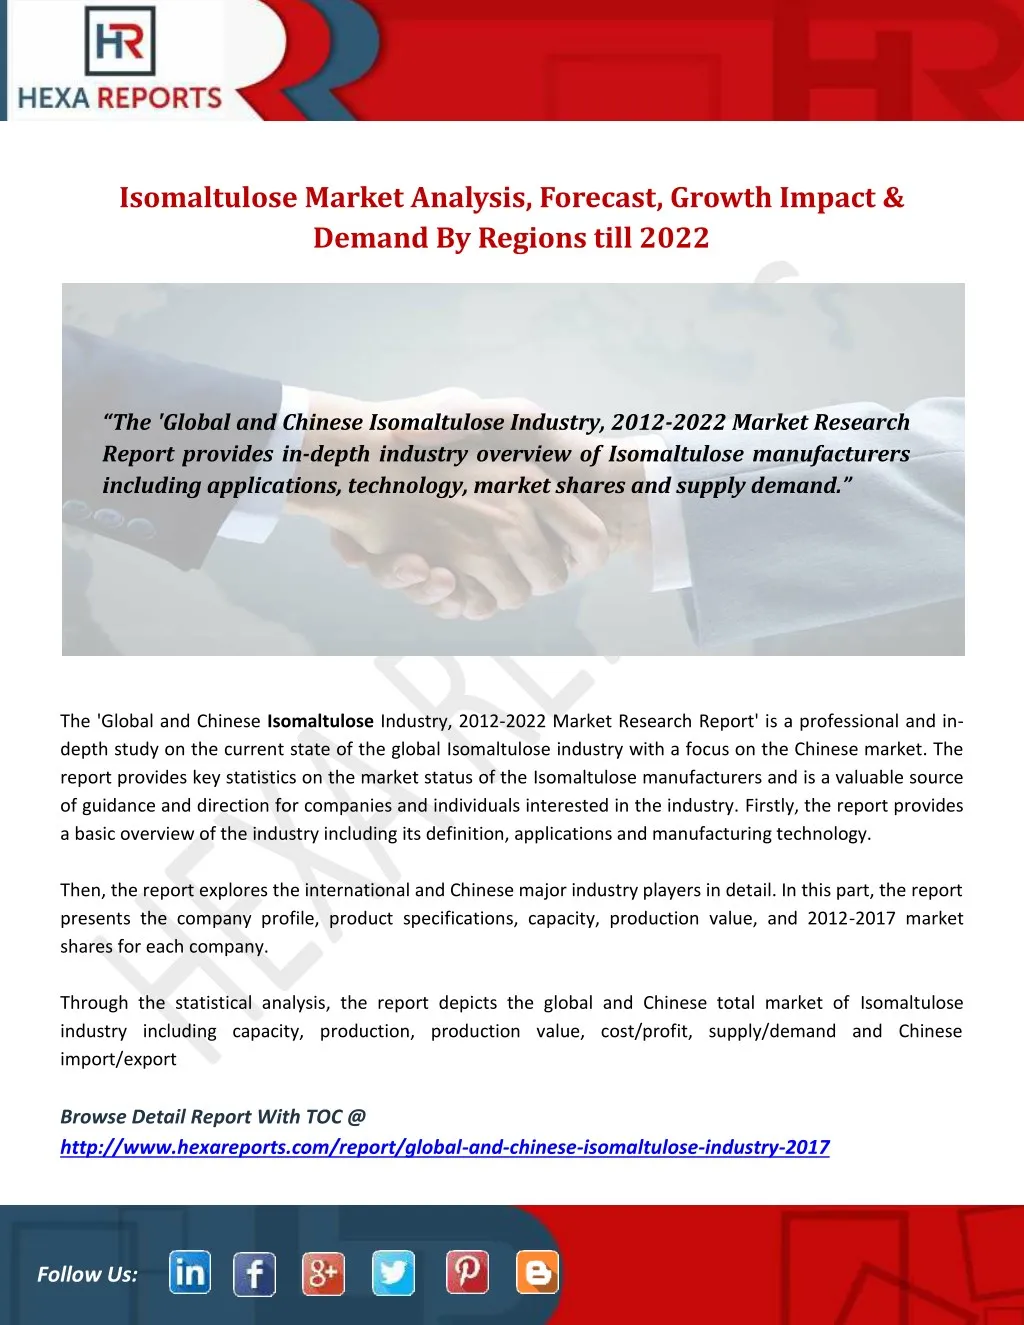 isomaltulose market analysis forecast growth